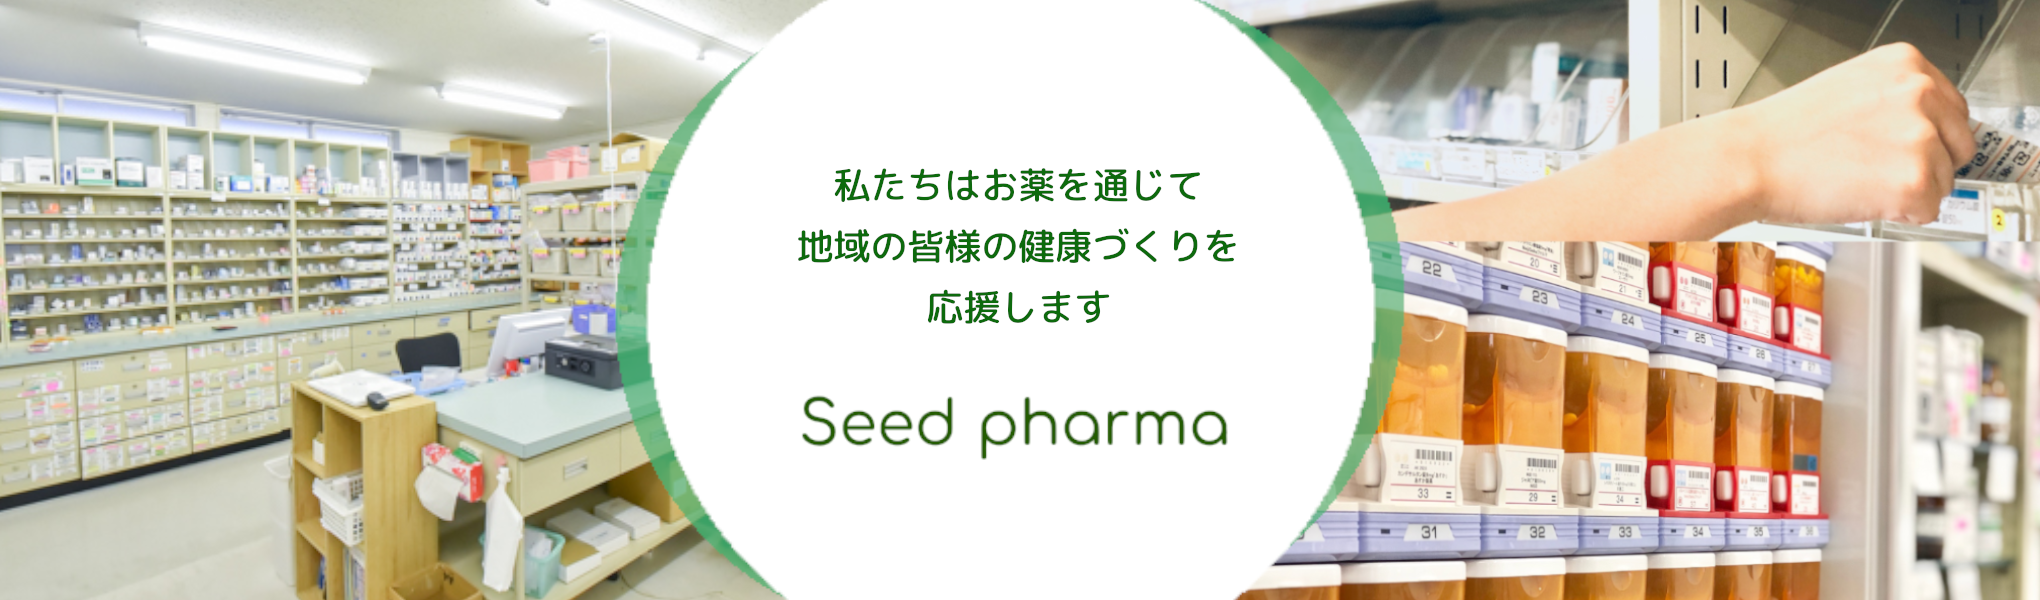 Seed pharma